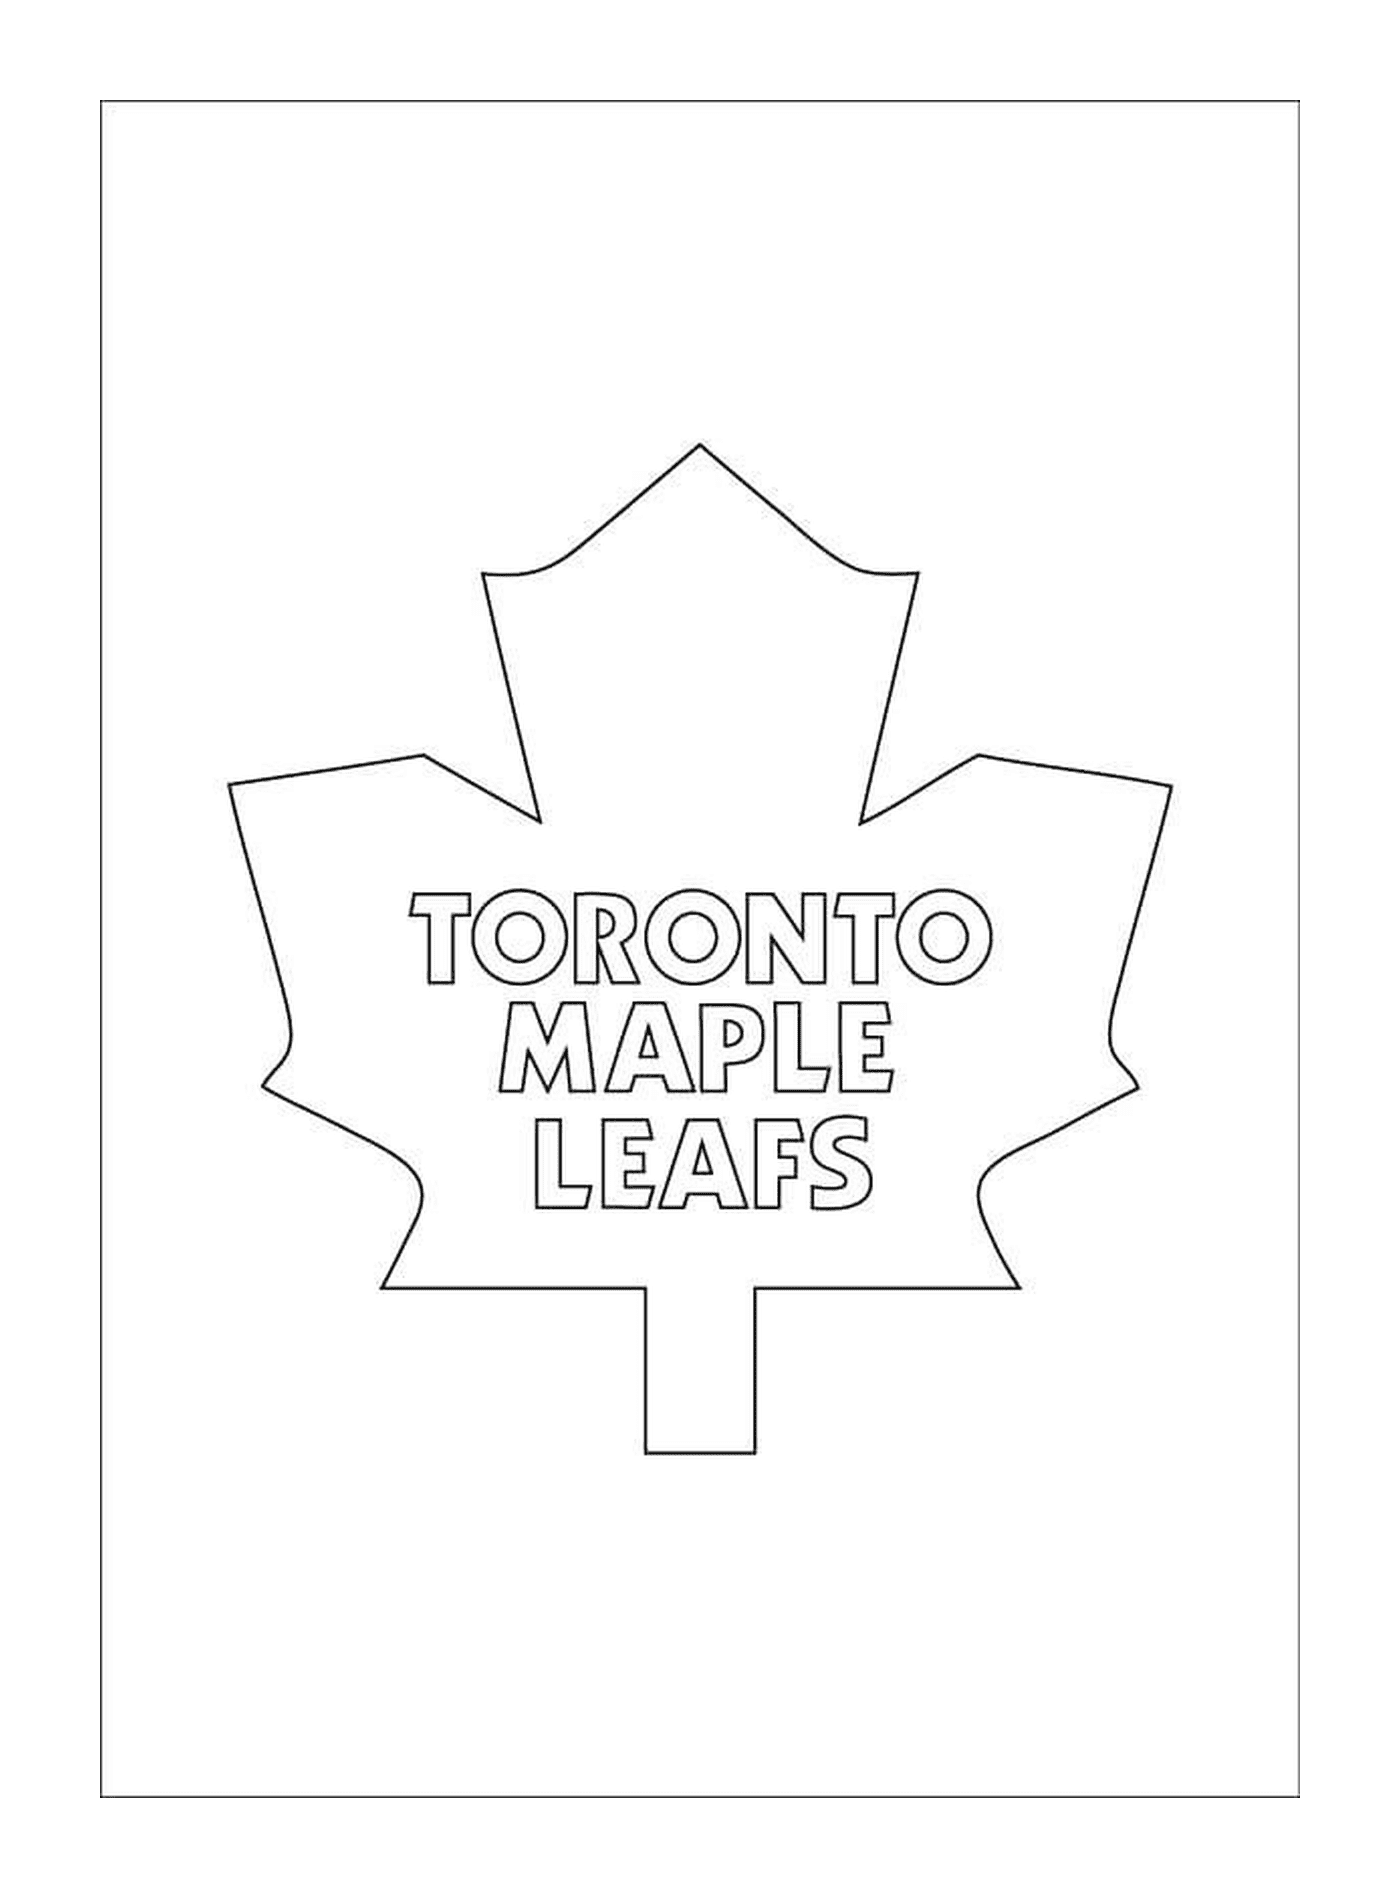   Logo des Maple Leafs de Toronto 